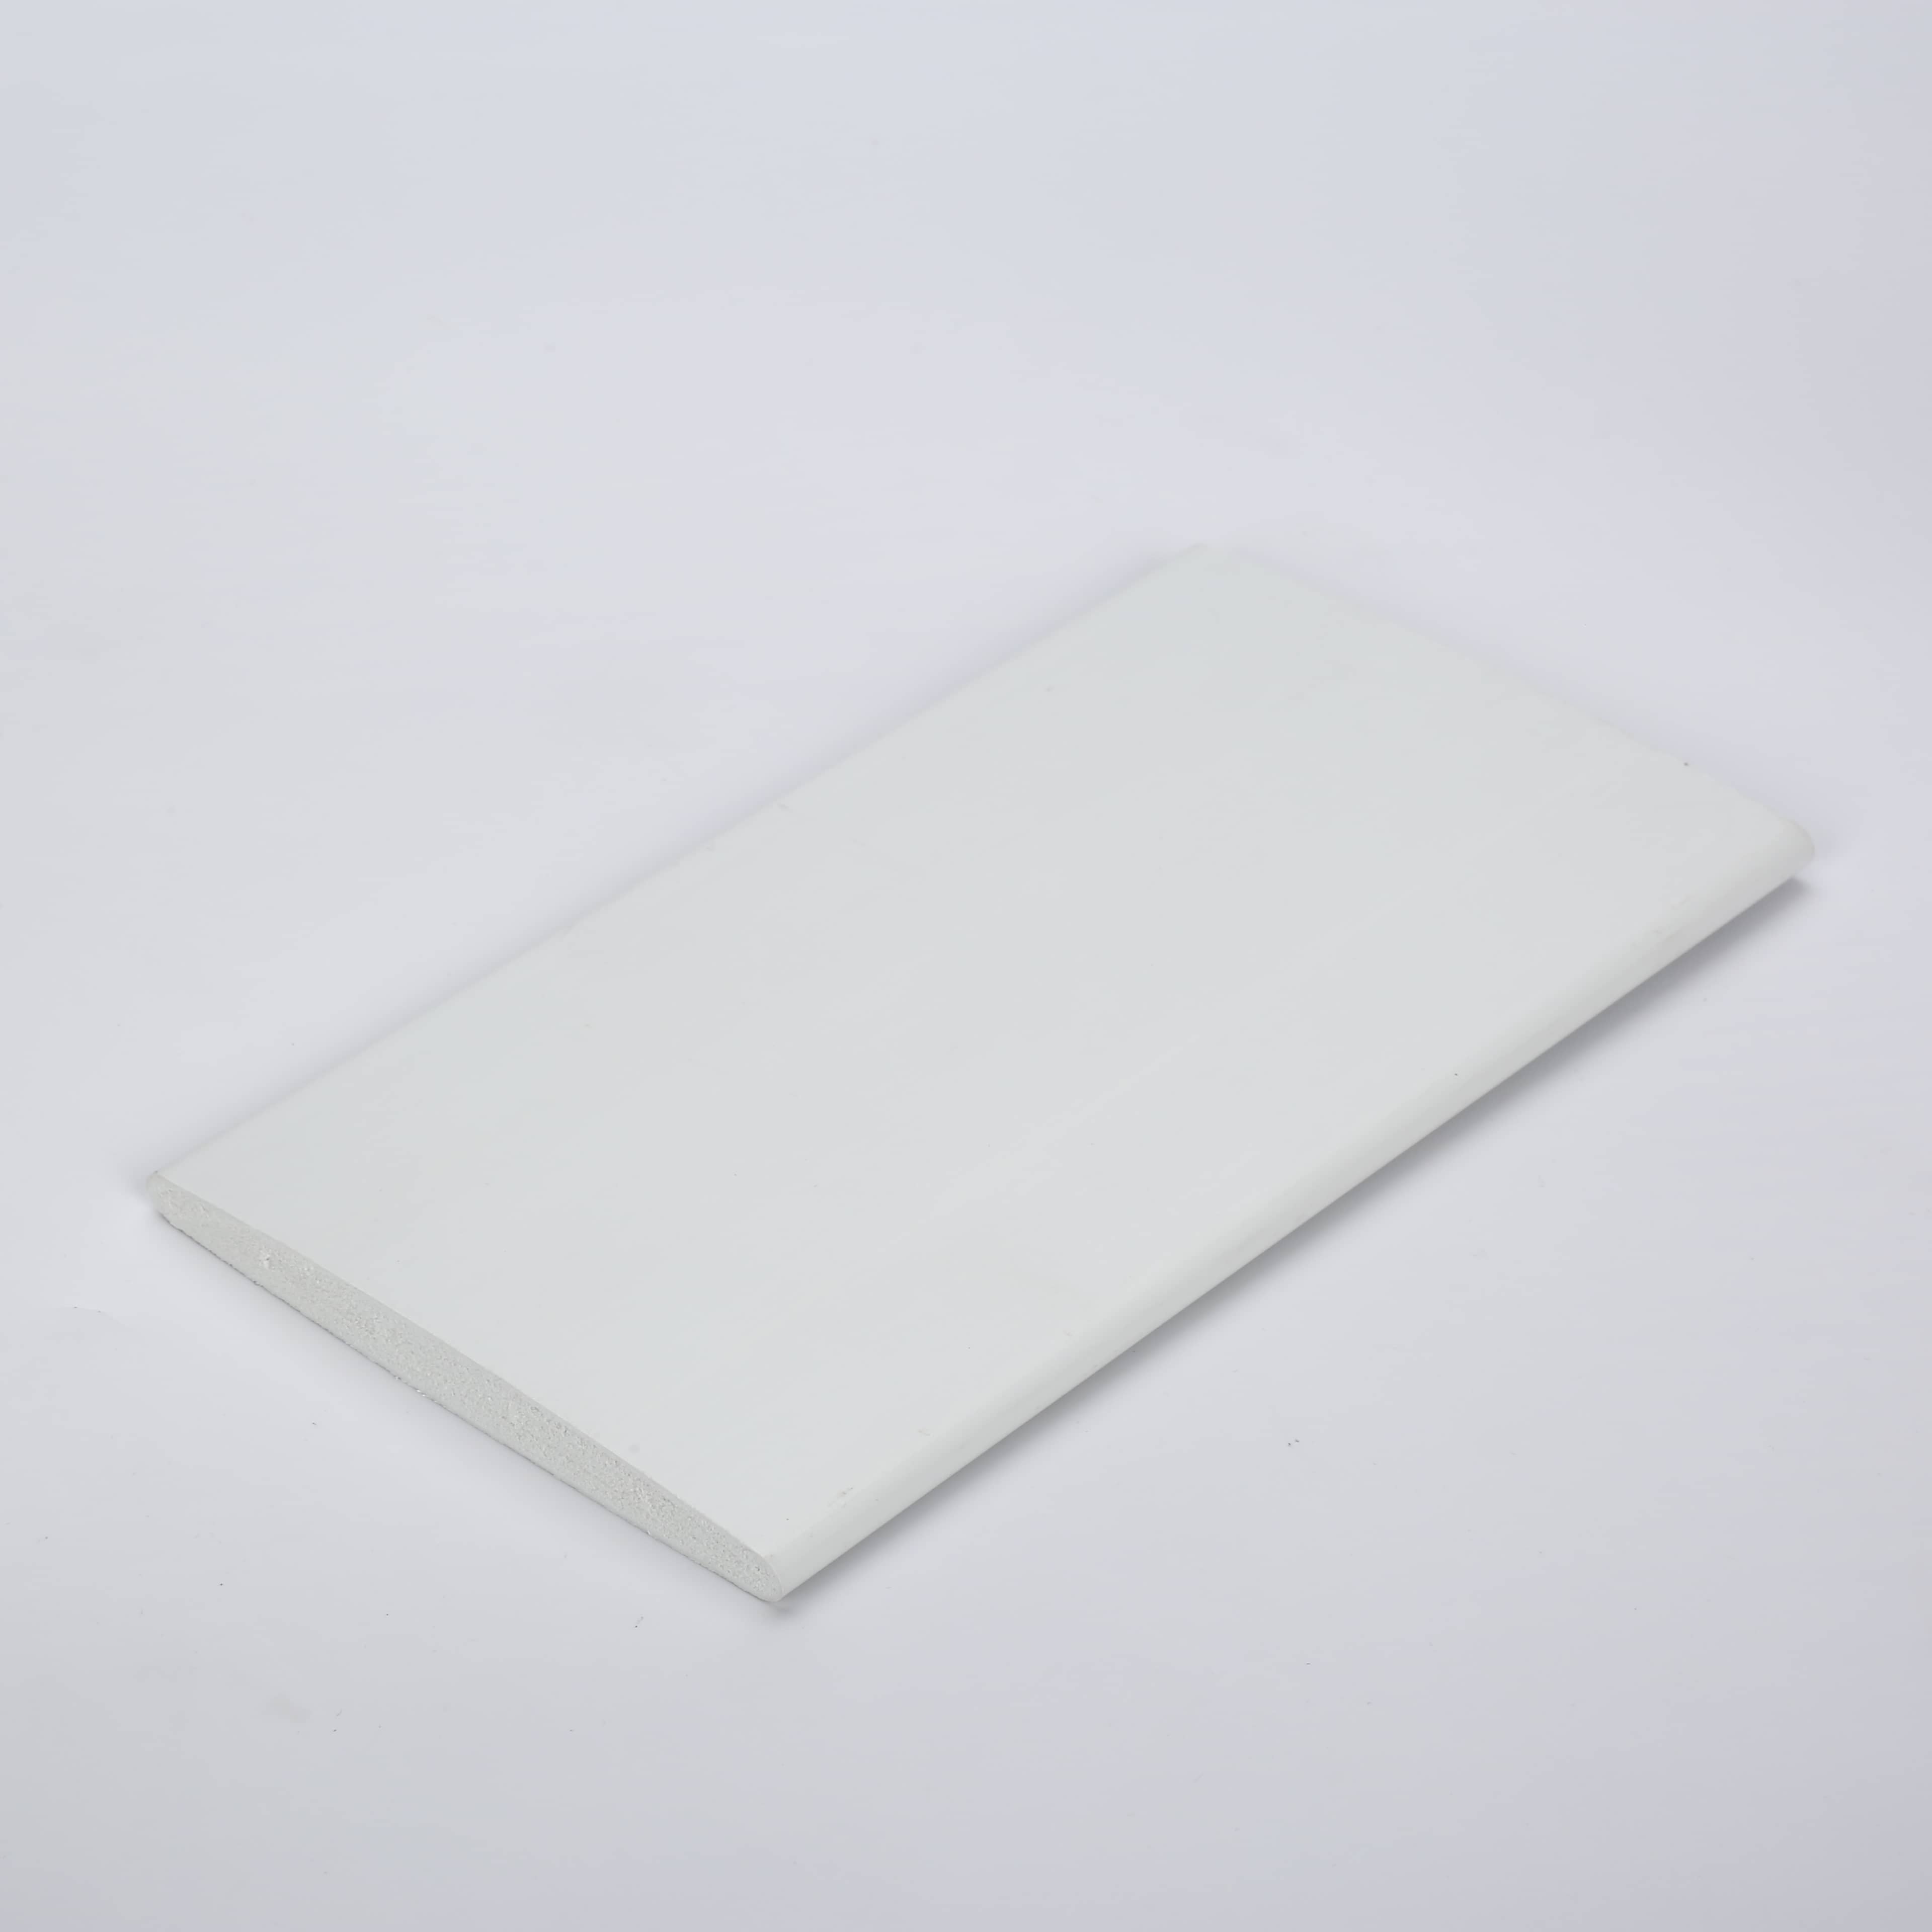 Rigid PVC Foam Profile